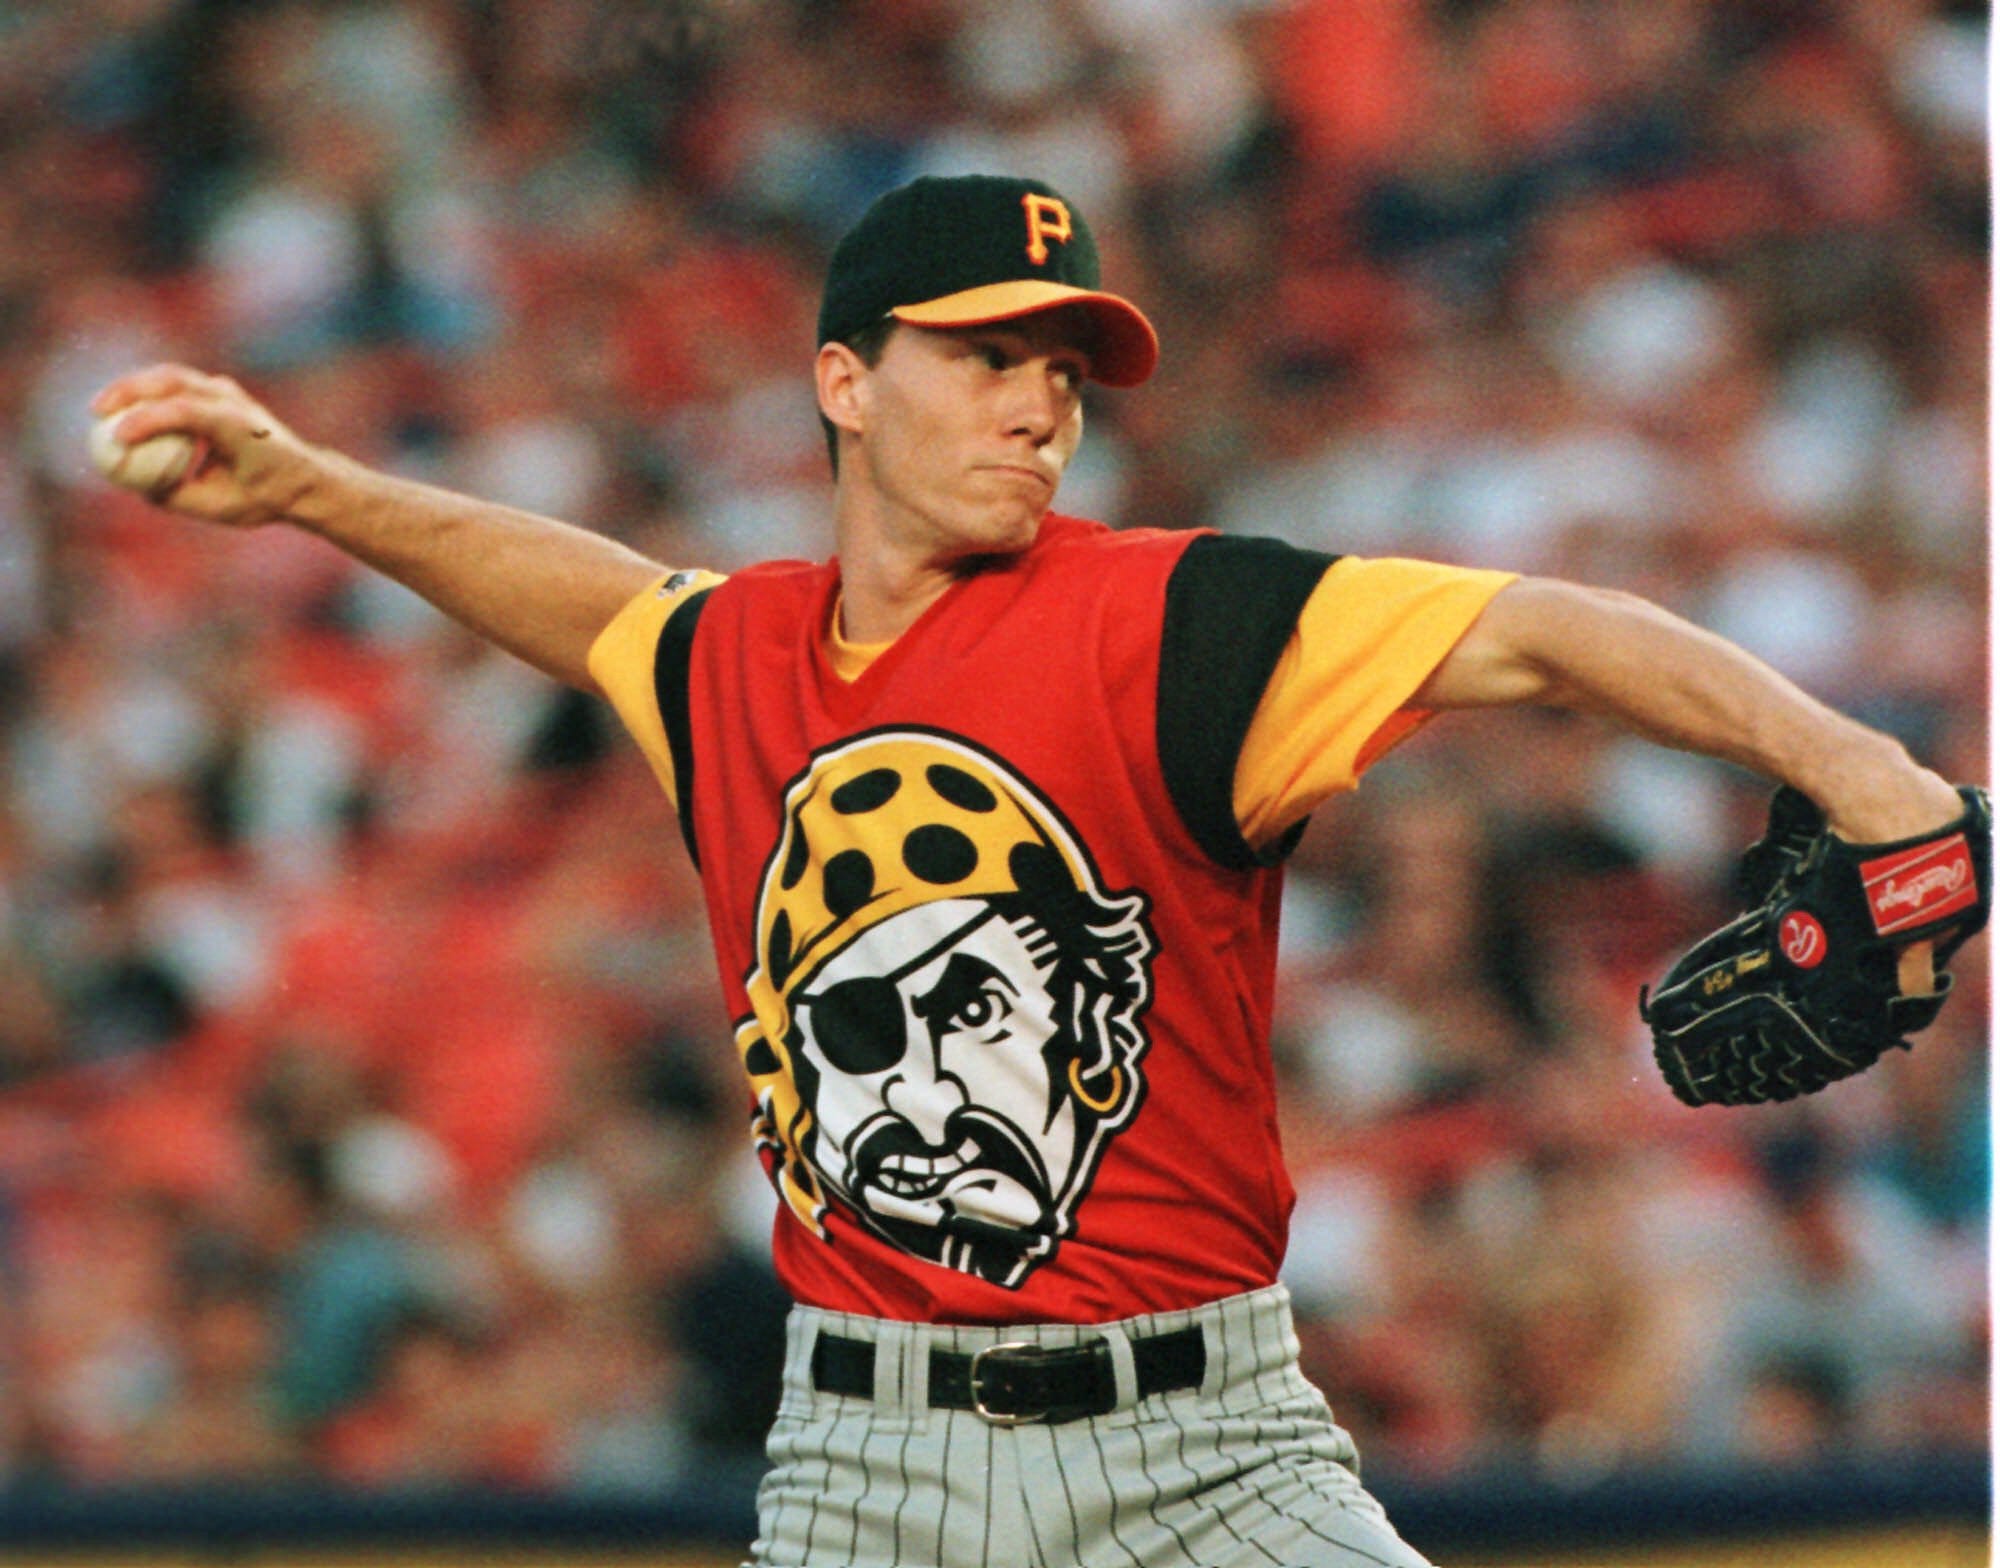 1999 baseball uniforms